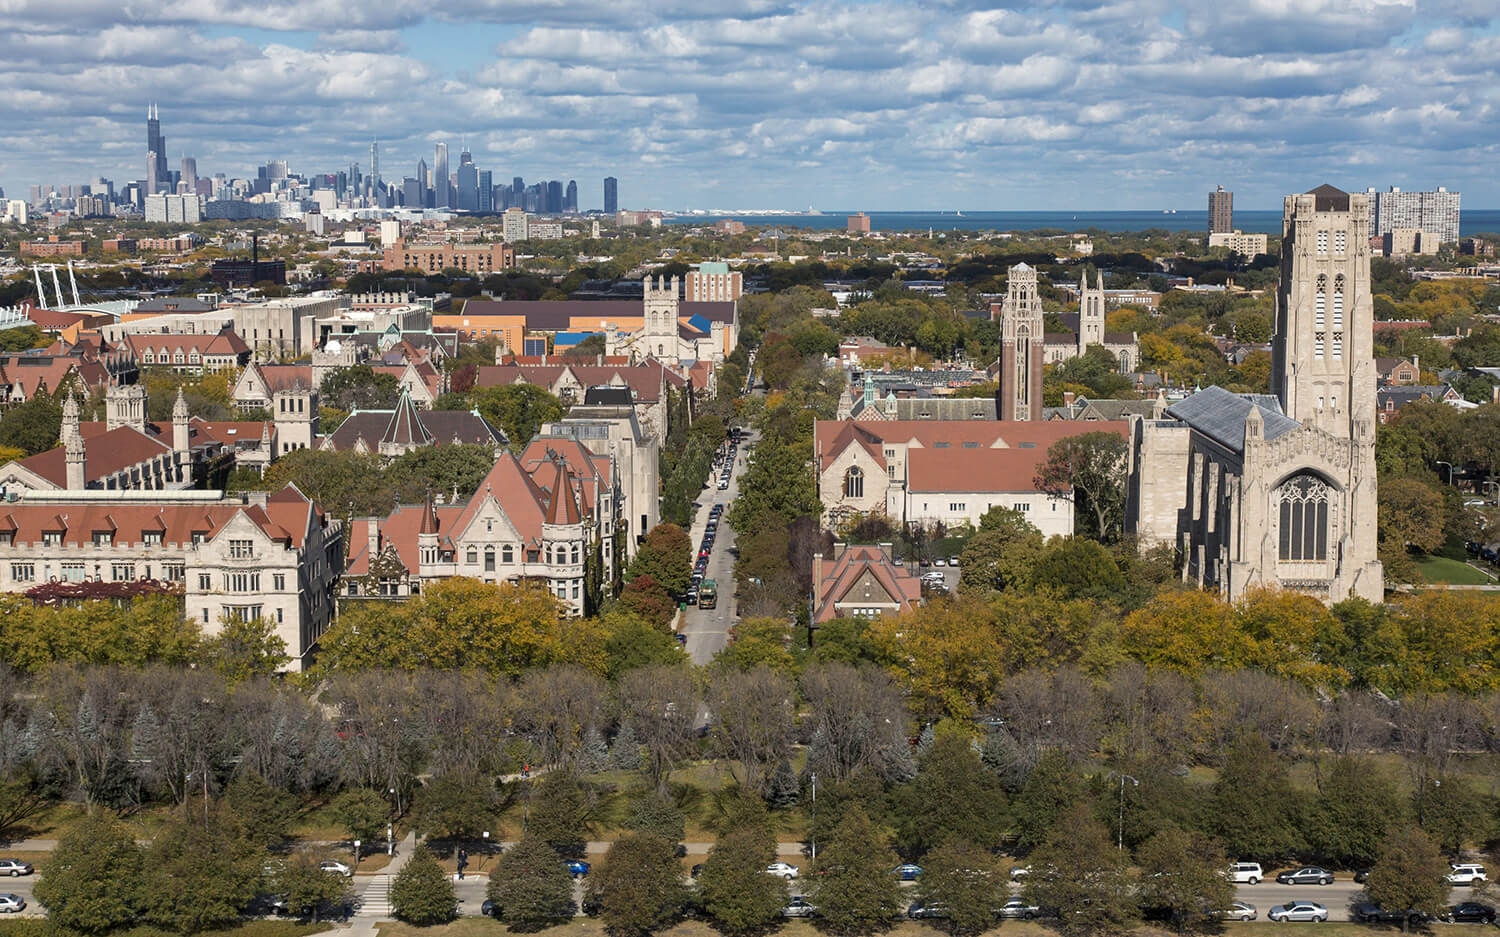 Univ of Chicago